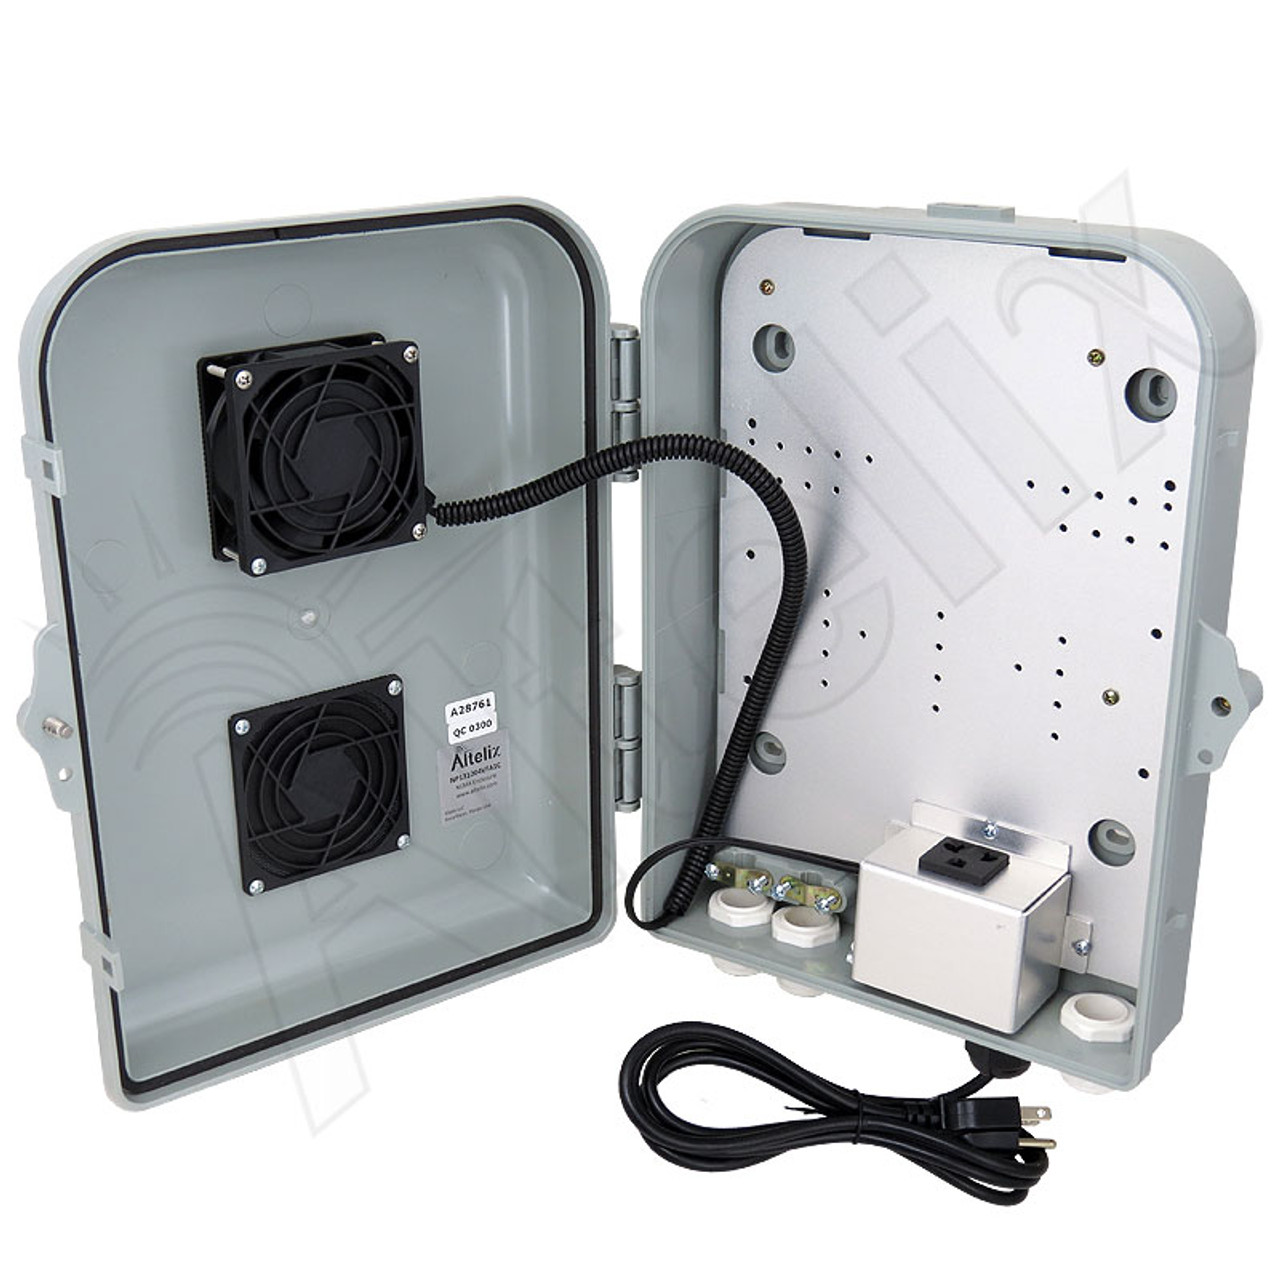 Altelix 12x9x7 PC+ABS Weatherproof Vented Utility Box NEMA Enclosure with  Hinged Door - Altelix